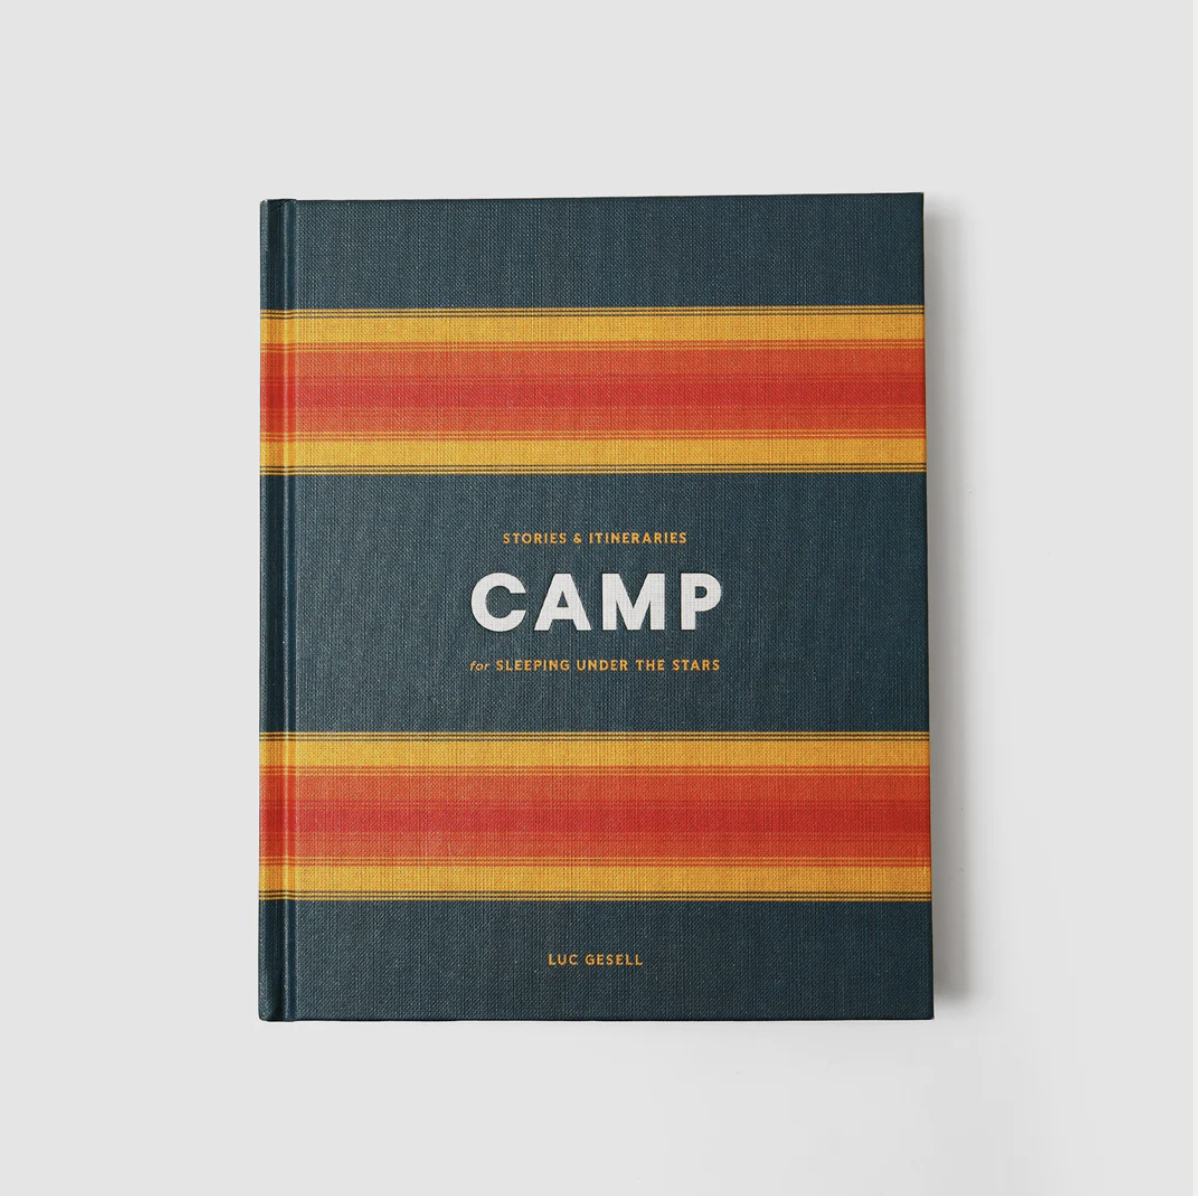 Camp: Stories & Itineraries